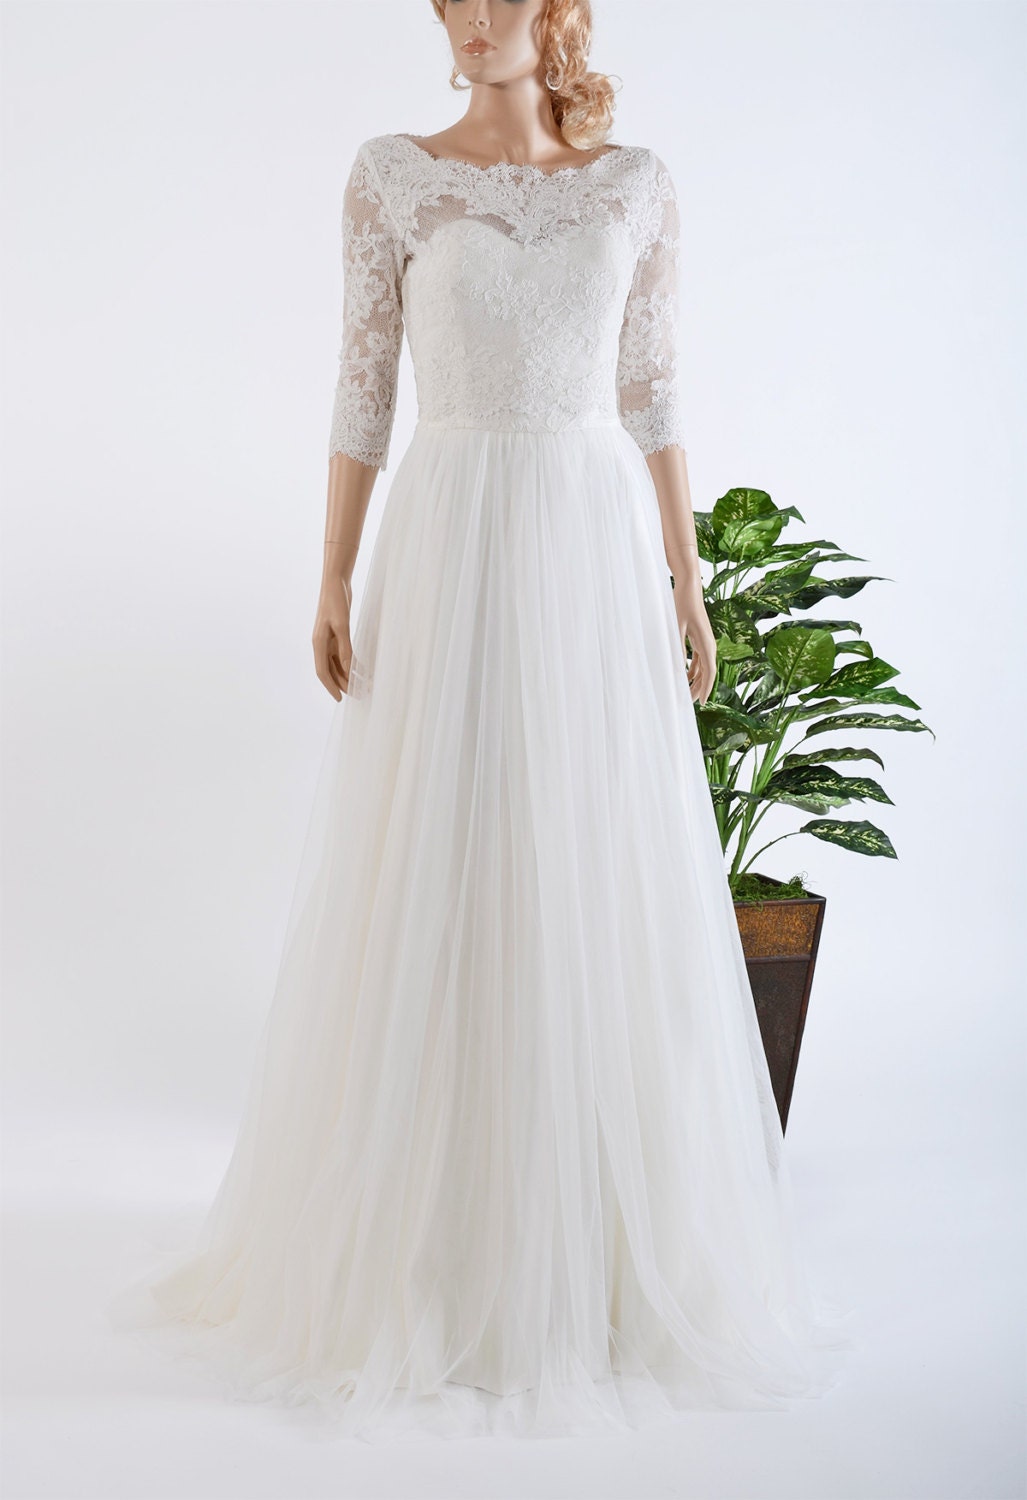 Lace wedding dress with 3/4 sleeve lace bolero by ELDesignStudio